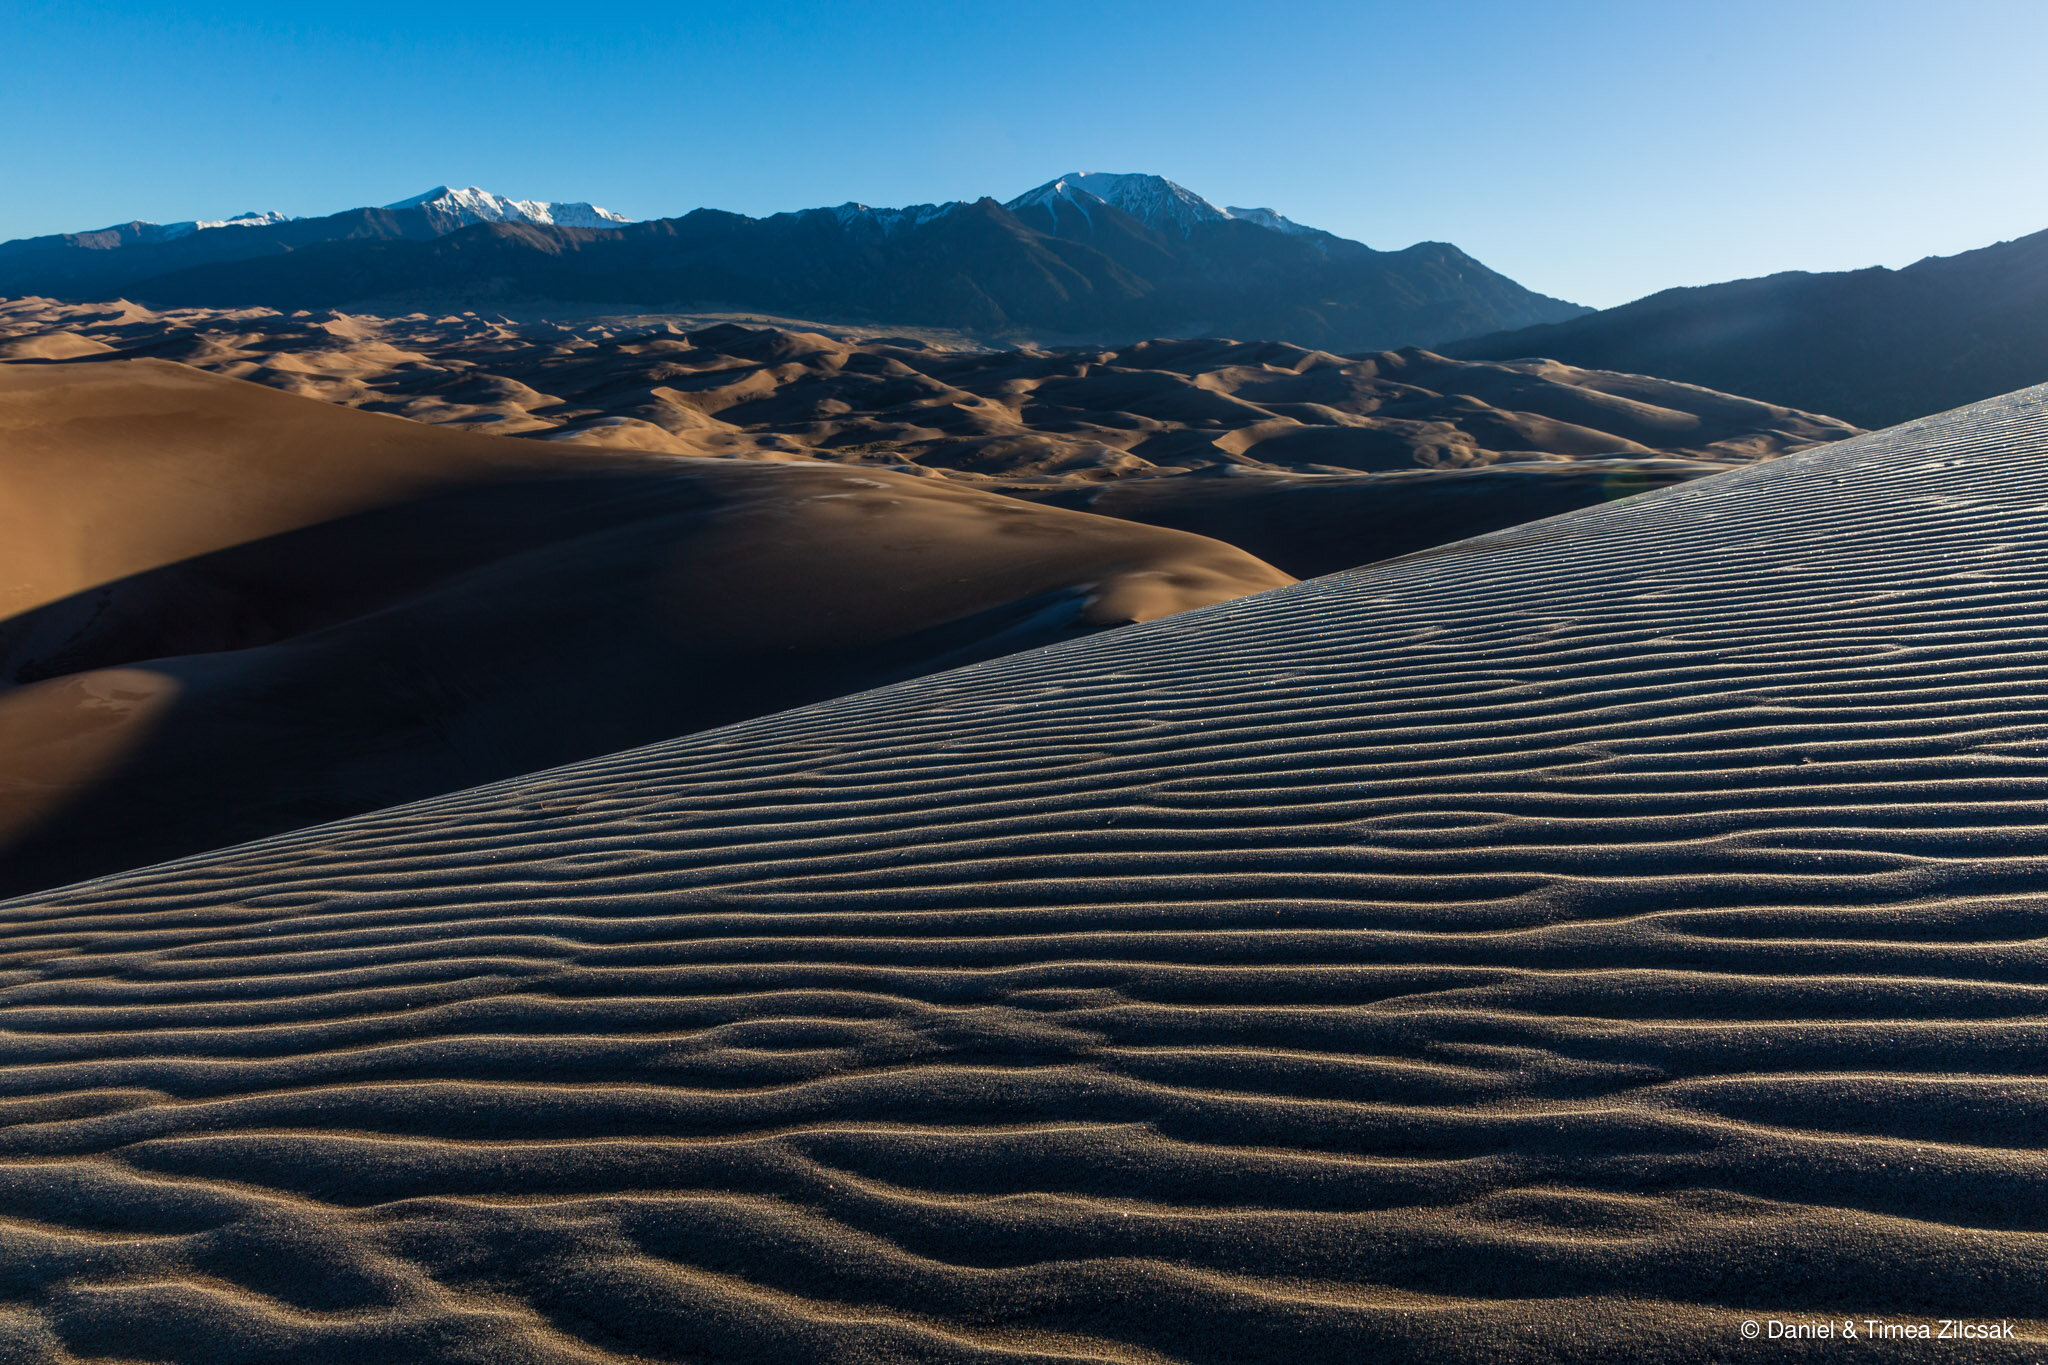 Great-Sand-Dunes-National-Park-9150.jpg